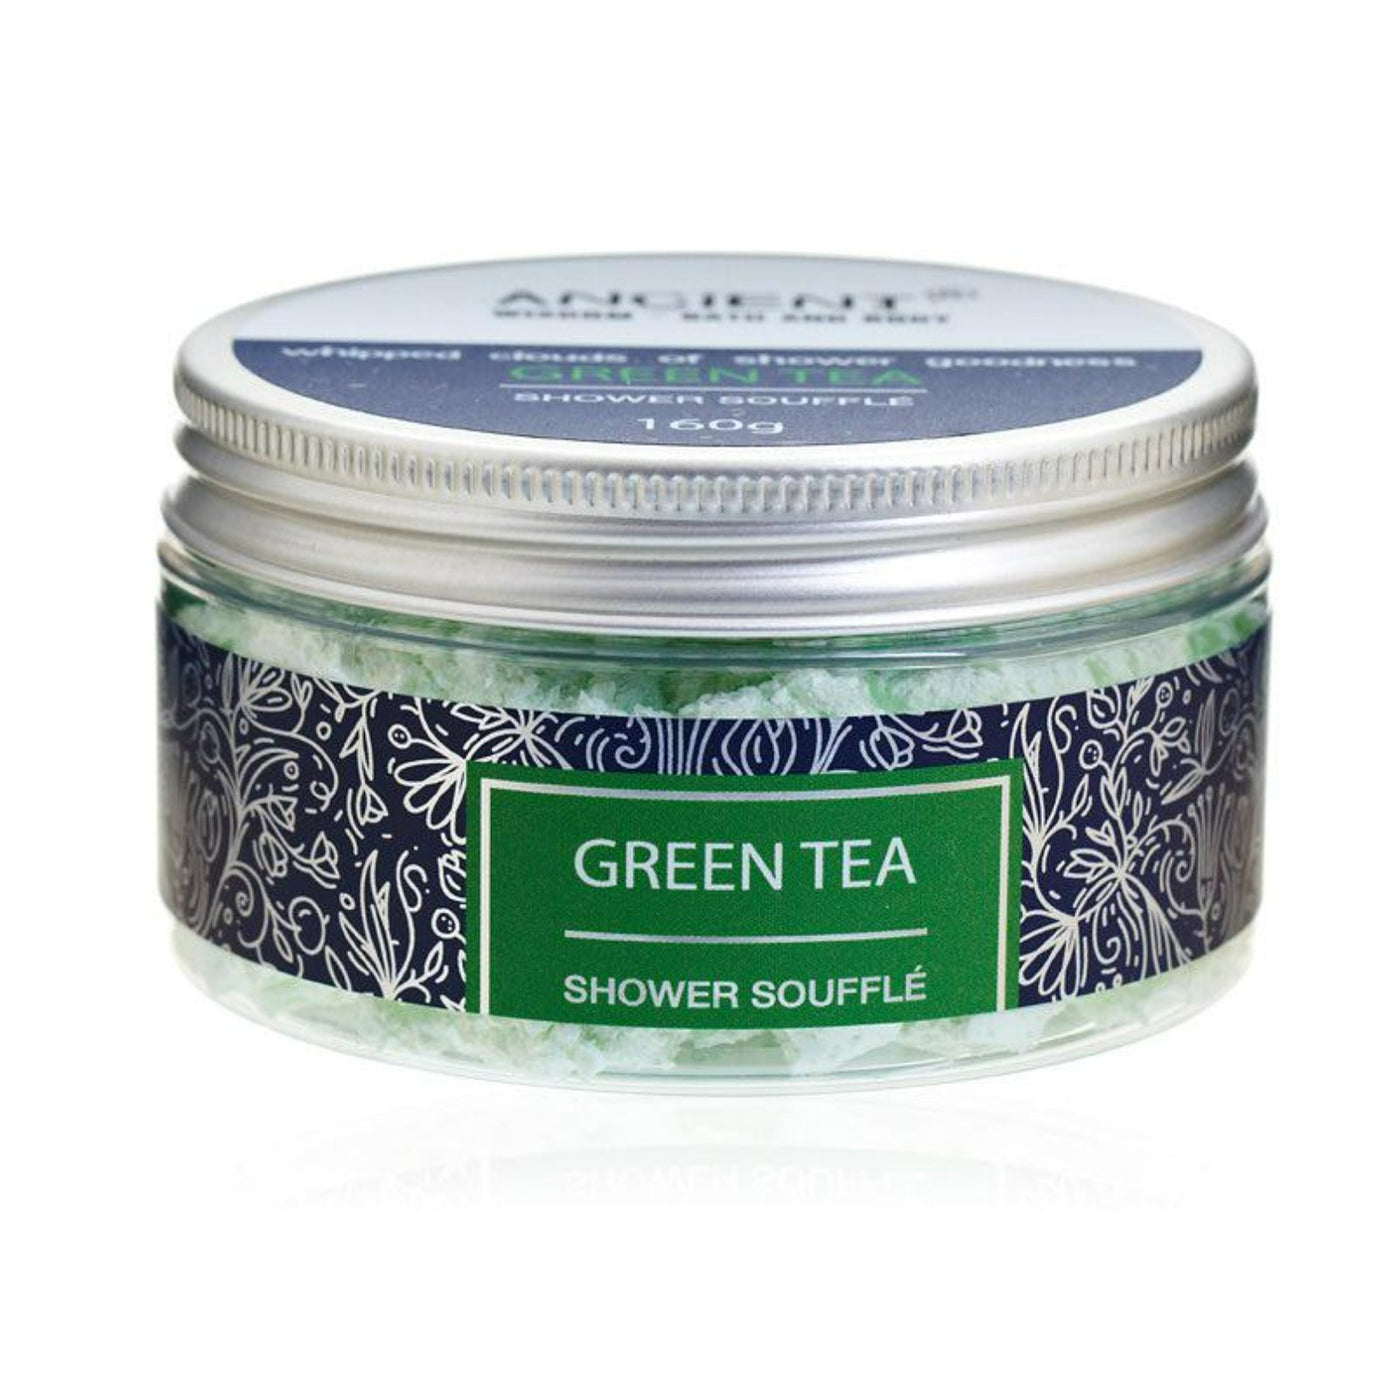 Body Cleansing Shower Souffle 160g - Green Tea.